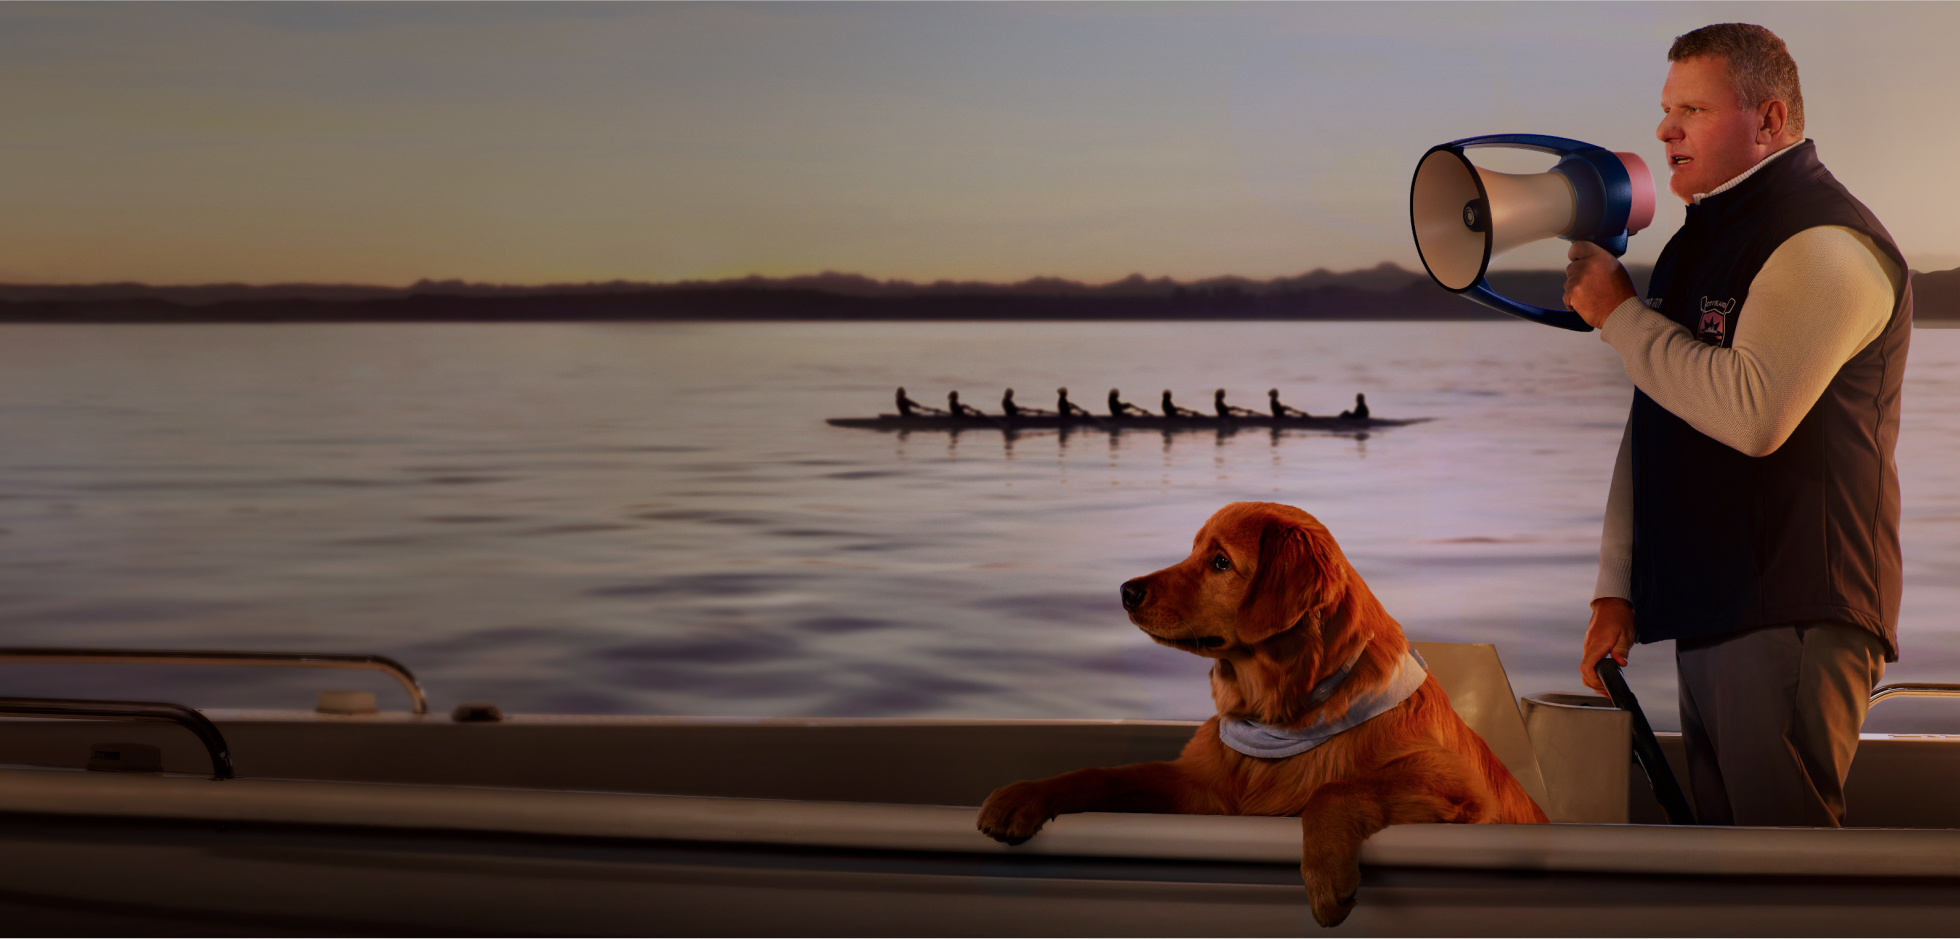 Guy Monseair holding megaphone coaching rowing team on lake with dog